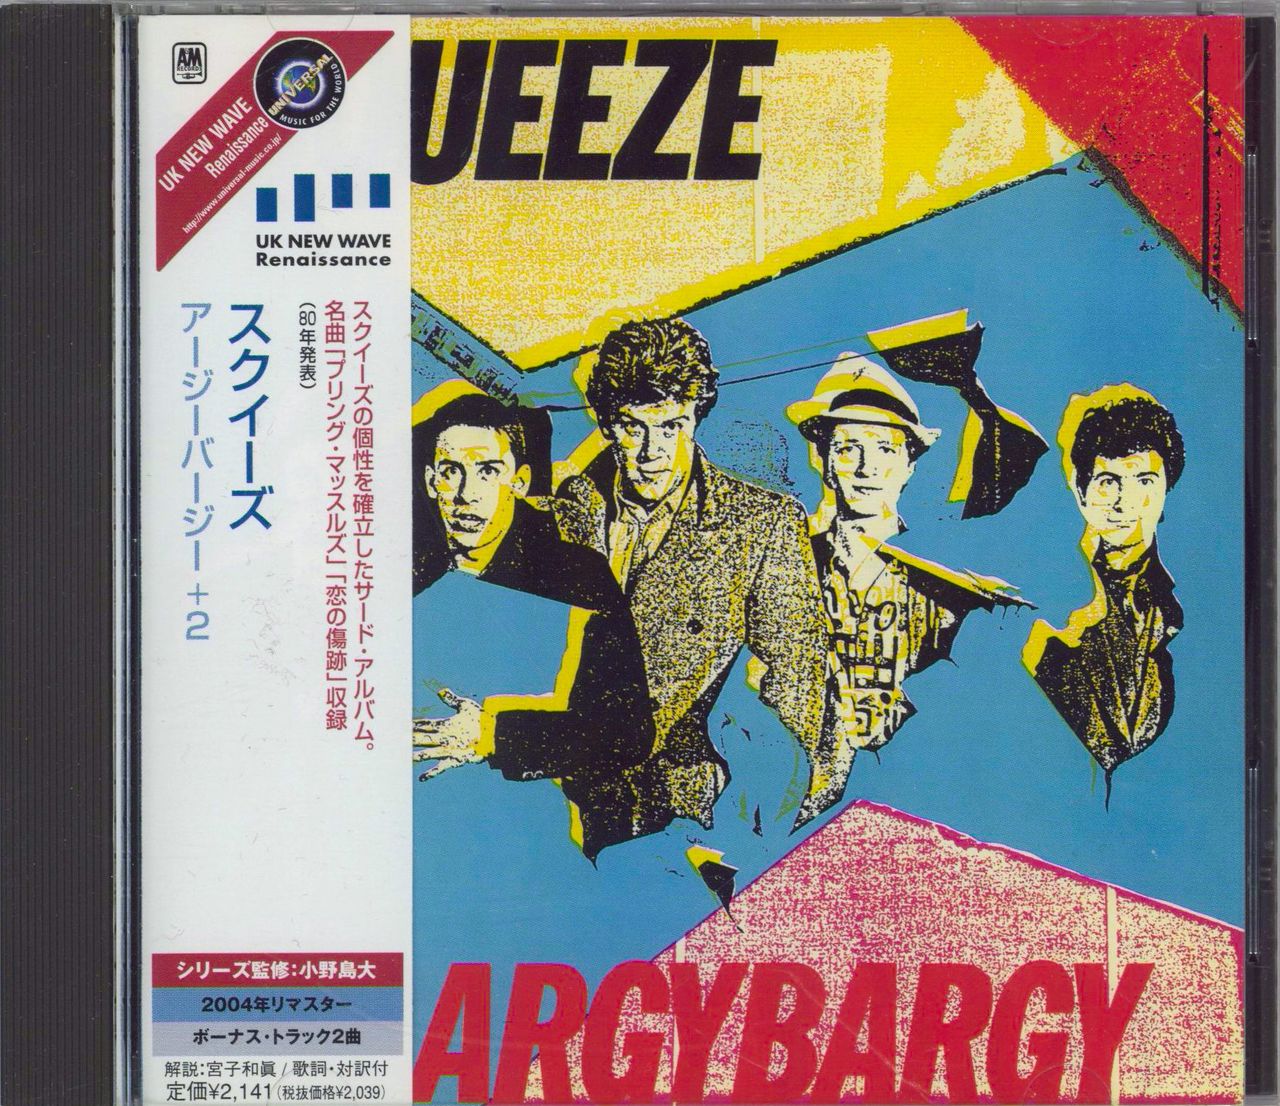 Squeeze Argybargy Japanese Promo CD album (CDLP) UICY-3392